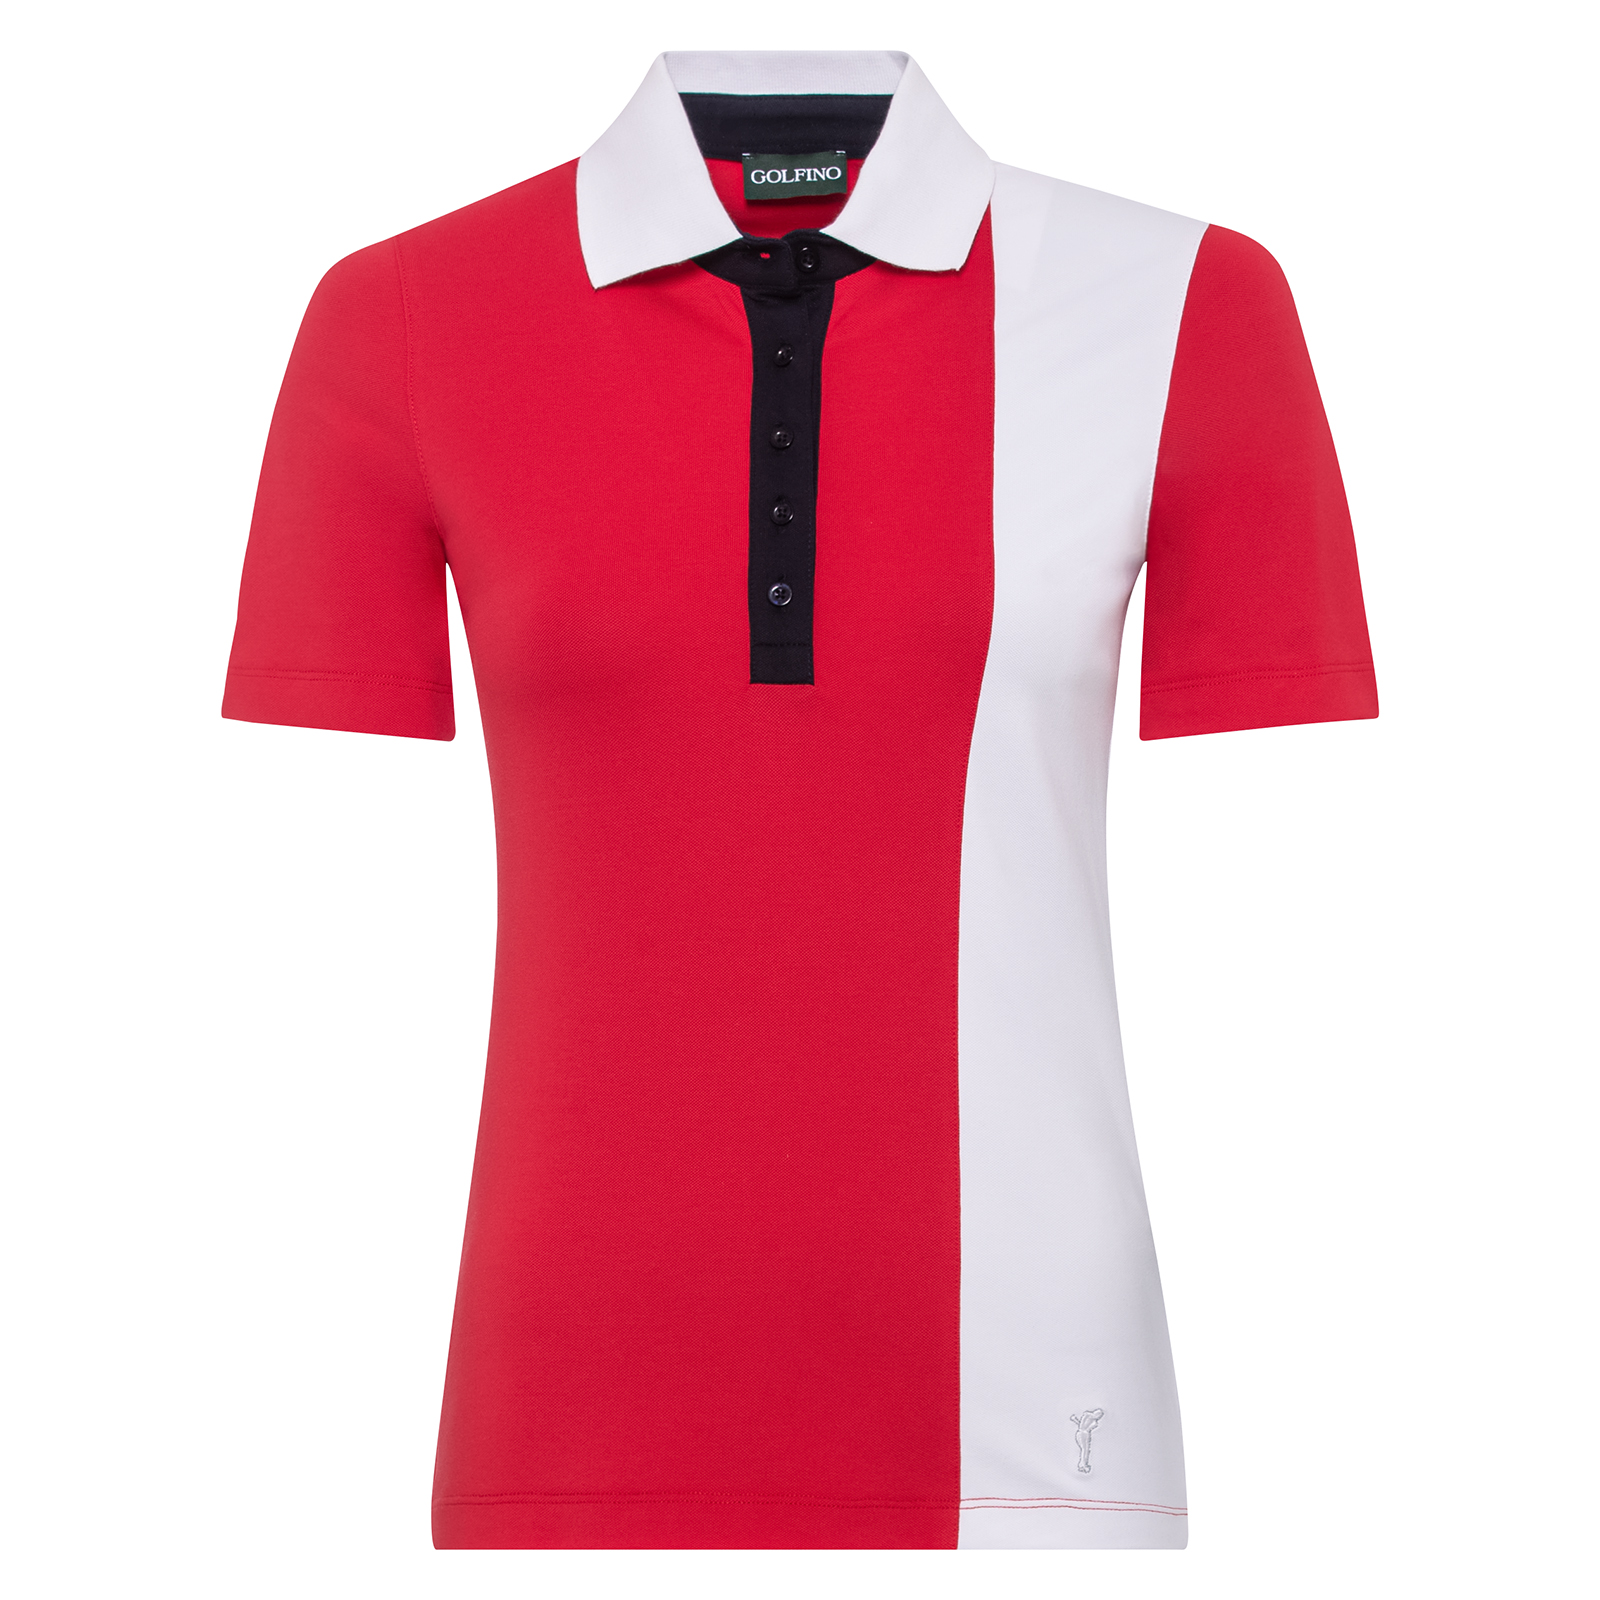 Ladies’ modern, short-sleeve golf polo shirt with sun protection